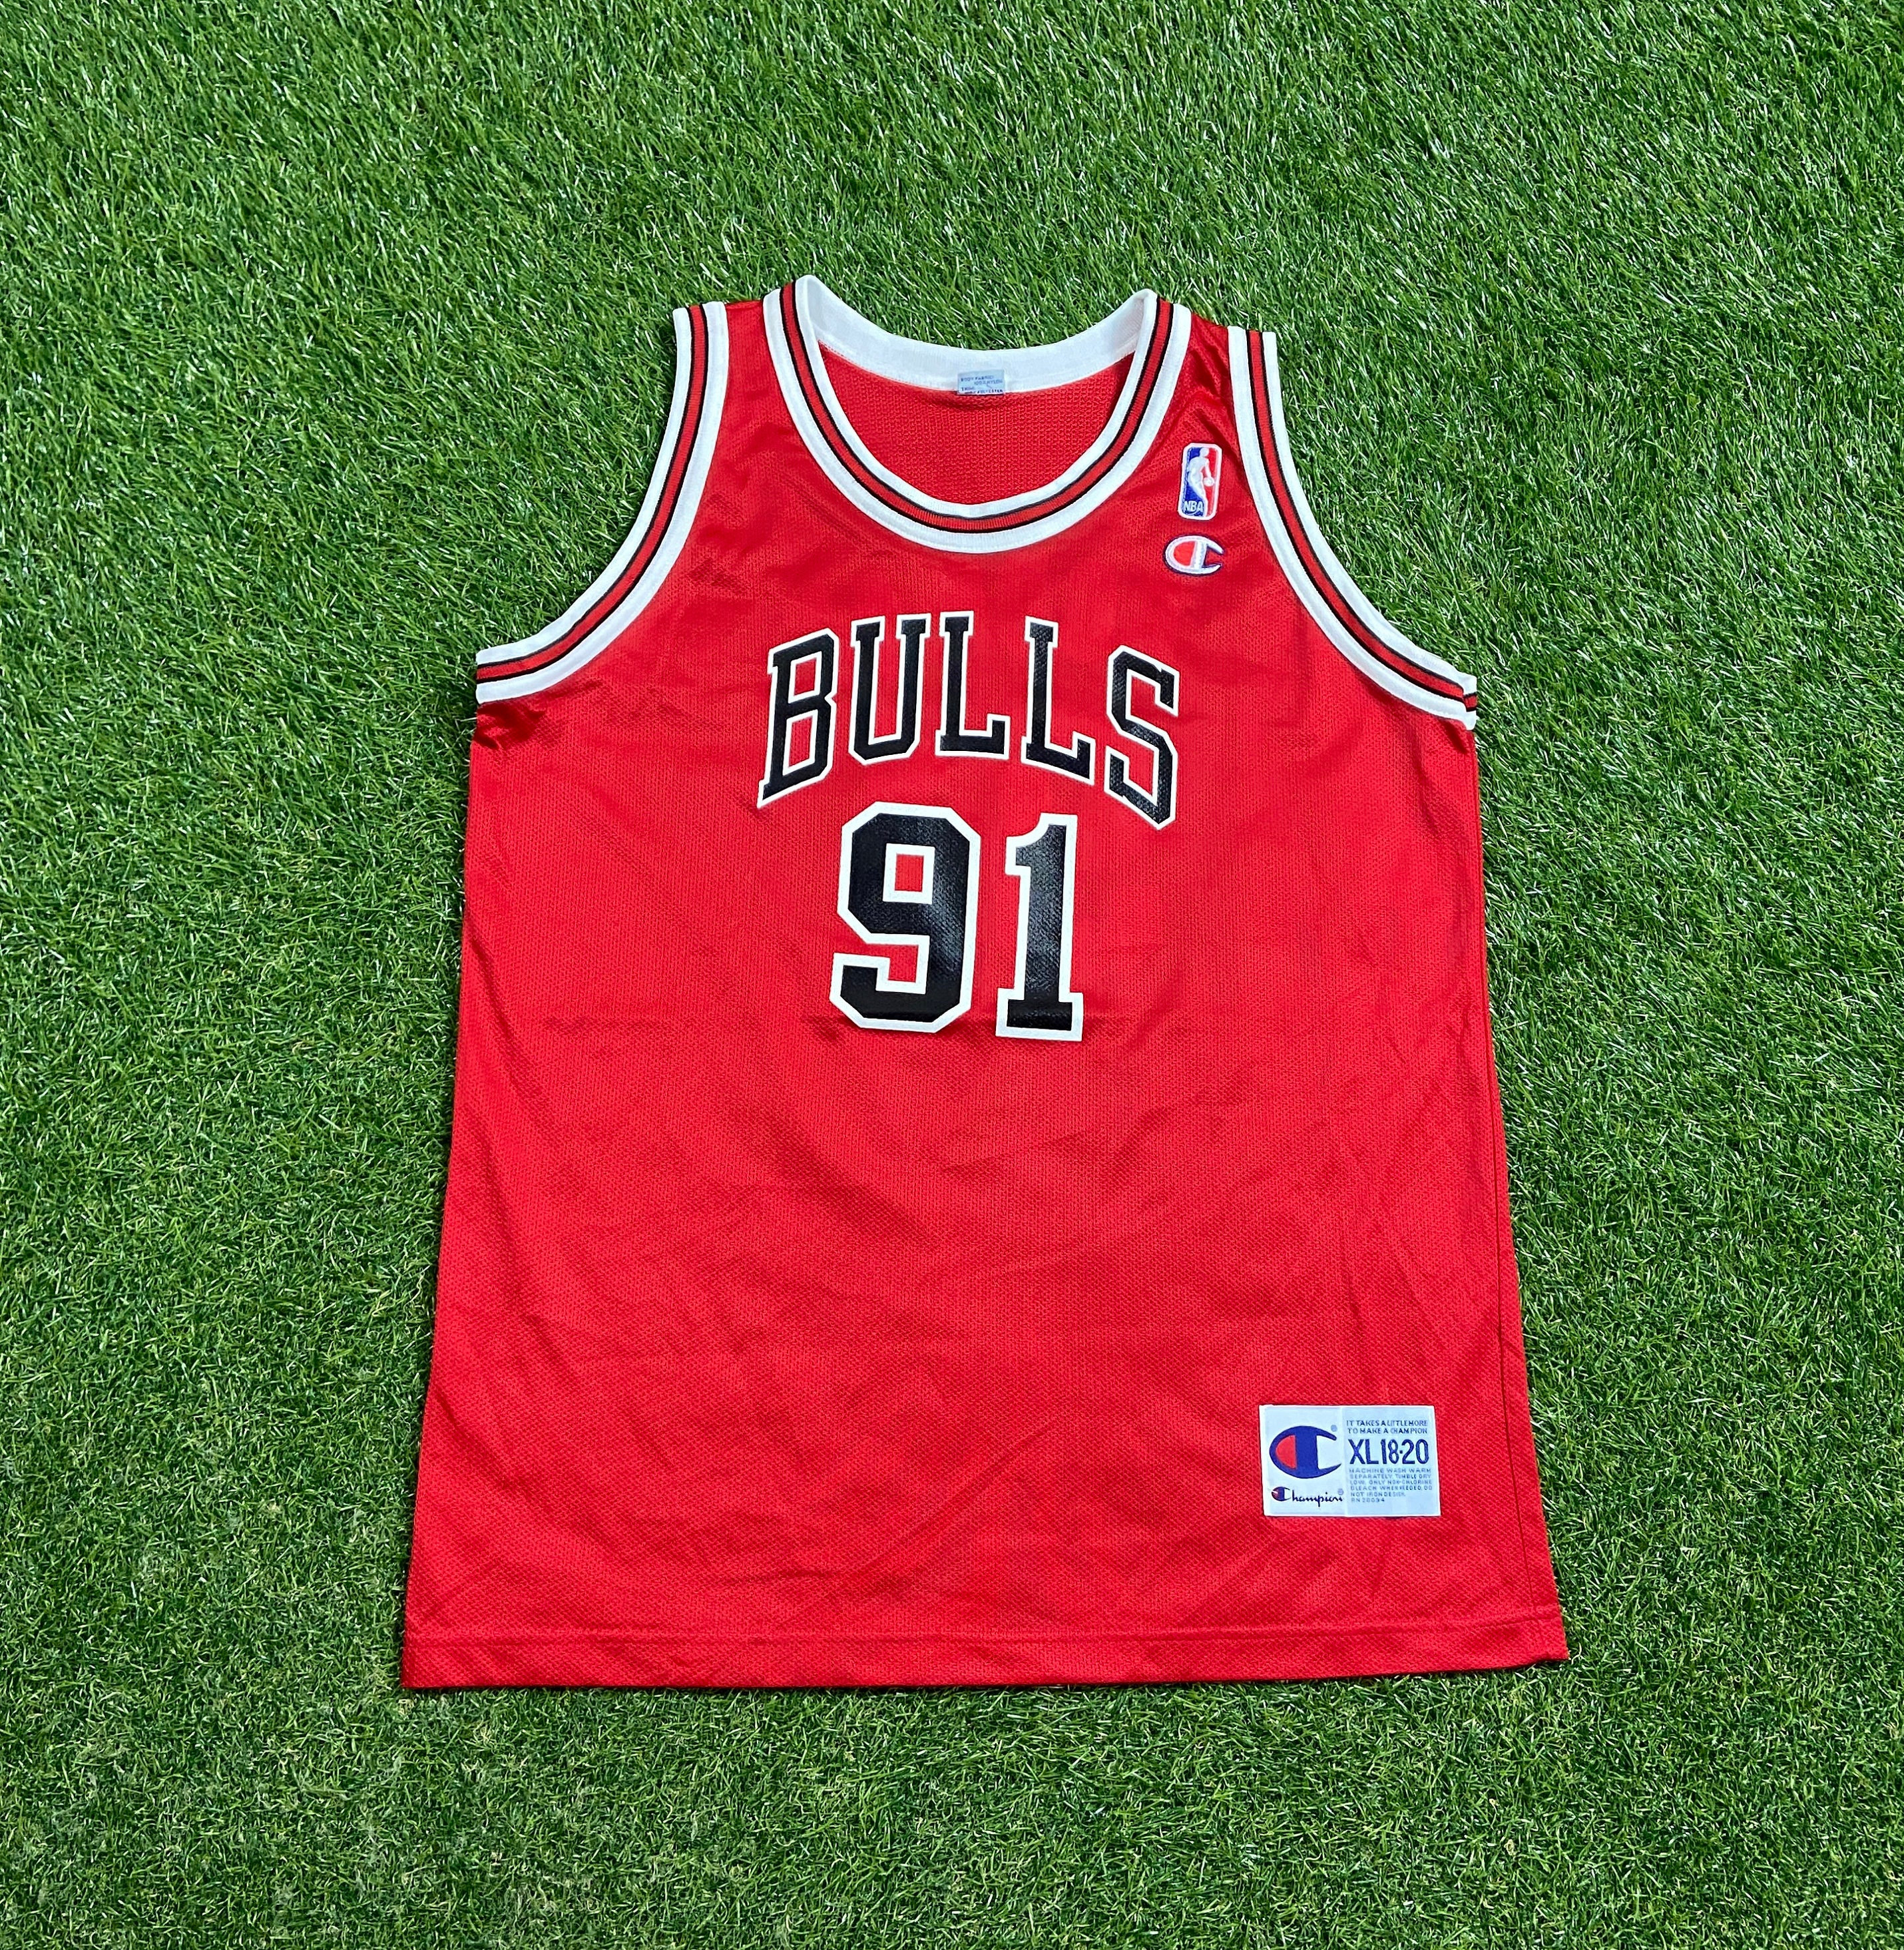 Vintage Bulls Gear Now Available! Sizes (S-XL) $30-$100 each